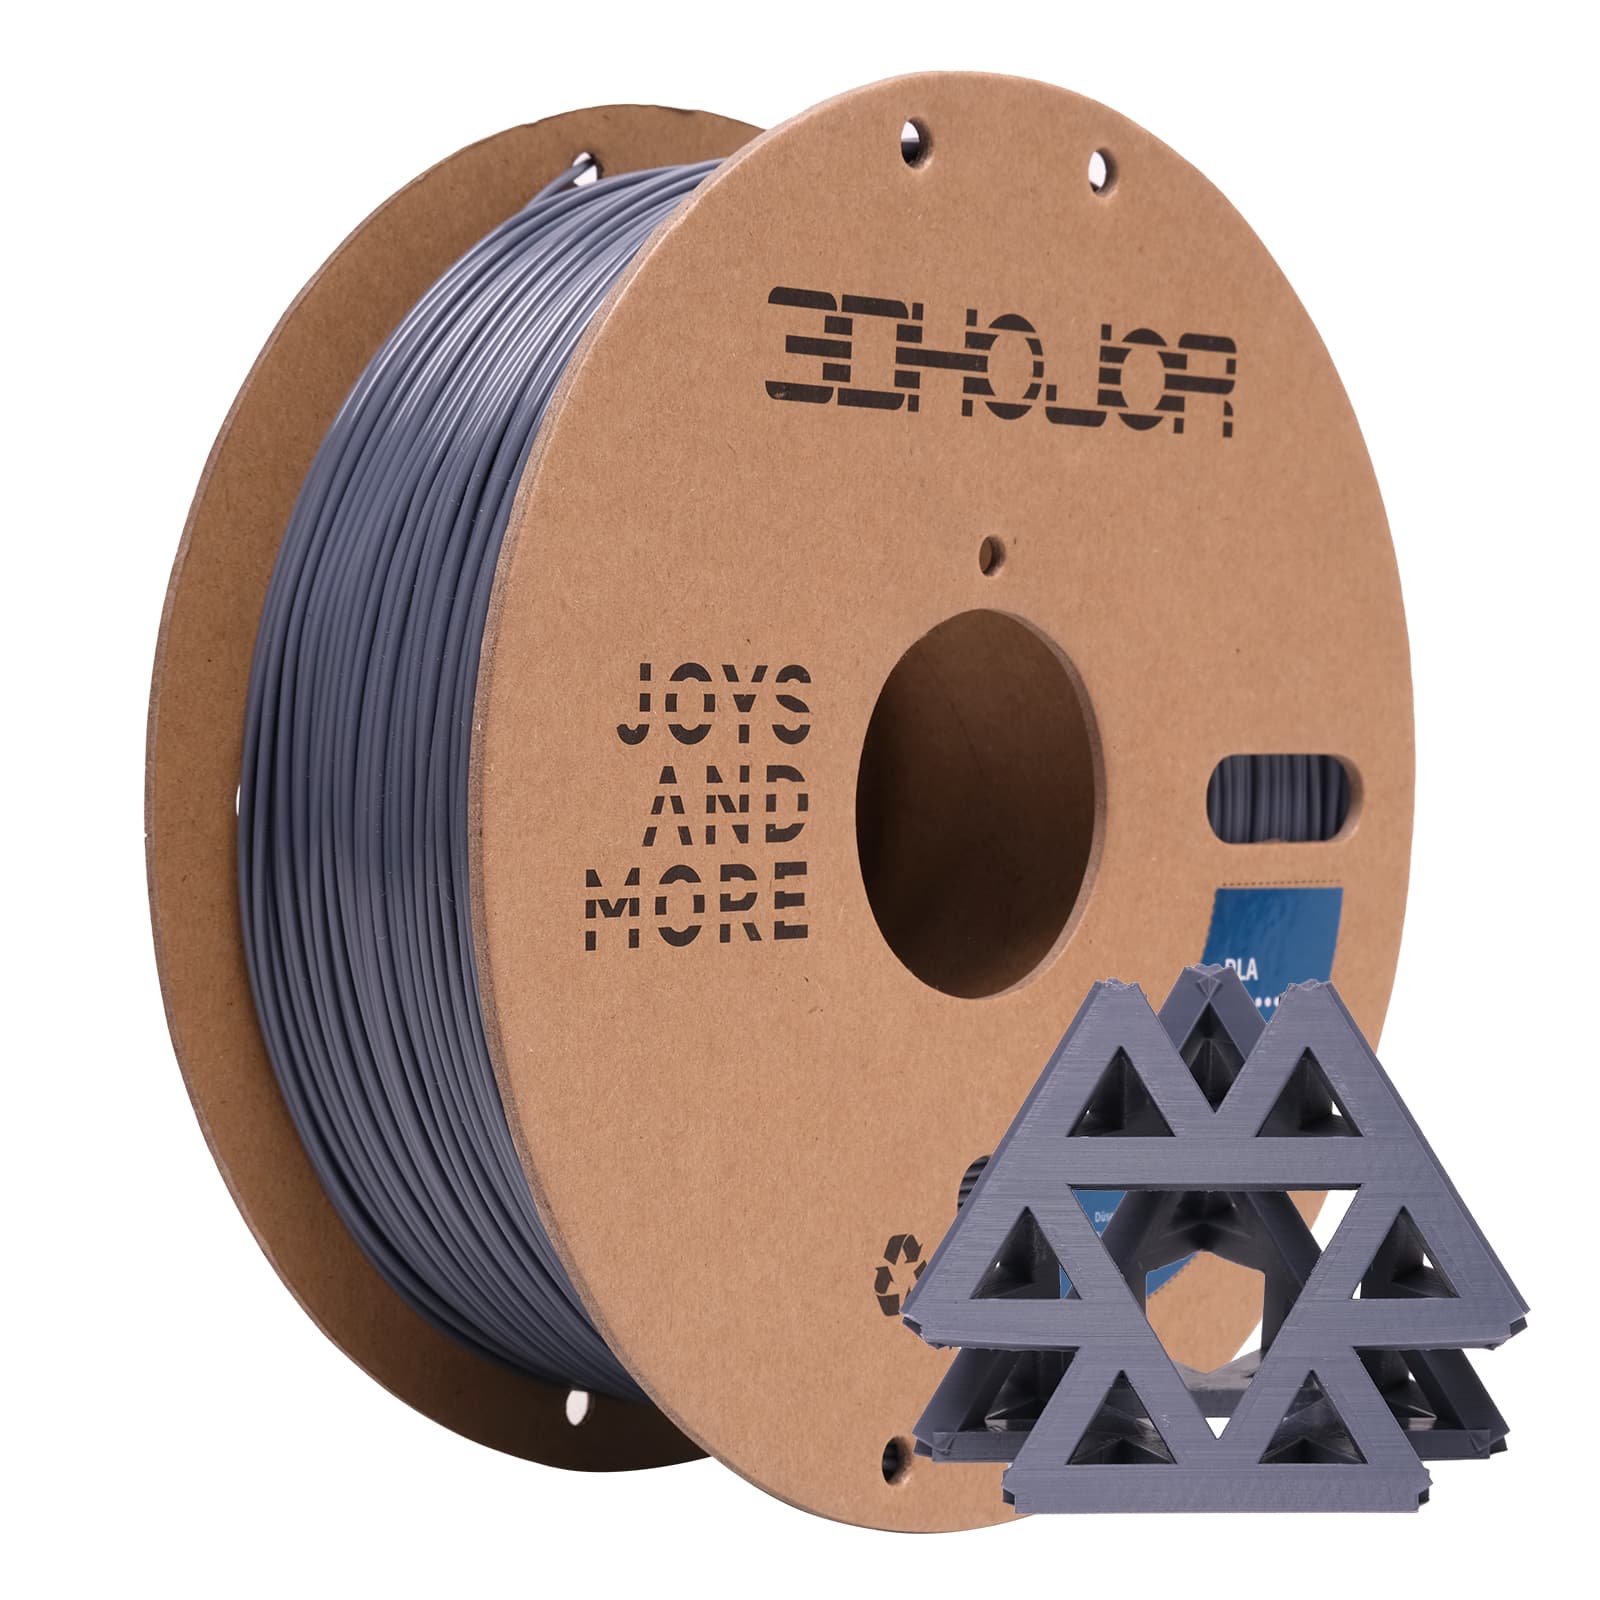 3DHoJor PLA Filament 1.75mm Grey,3D Printing Filament,1kg Cardboard Spool (2.2lbs), Fit Most FDM 3D Printer